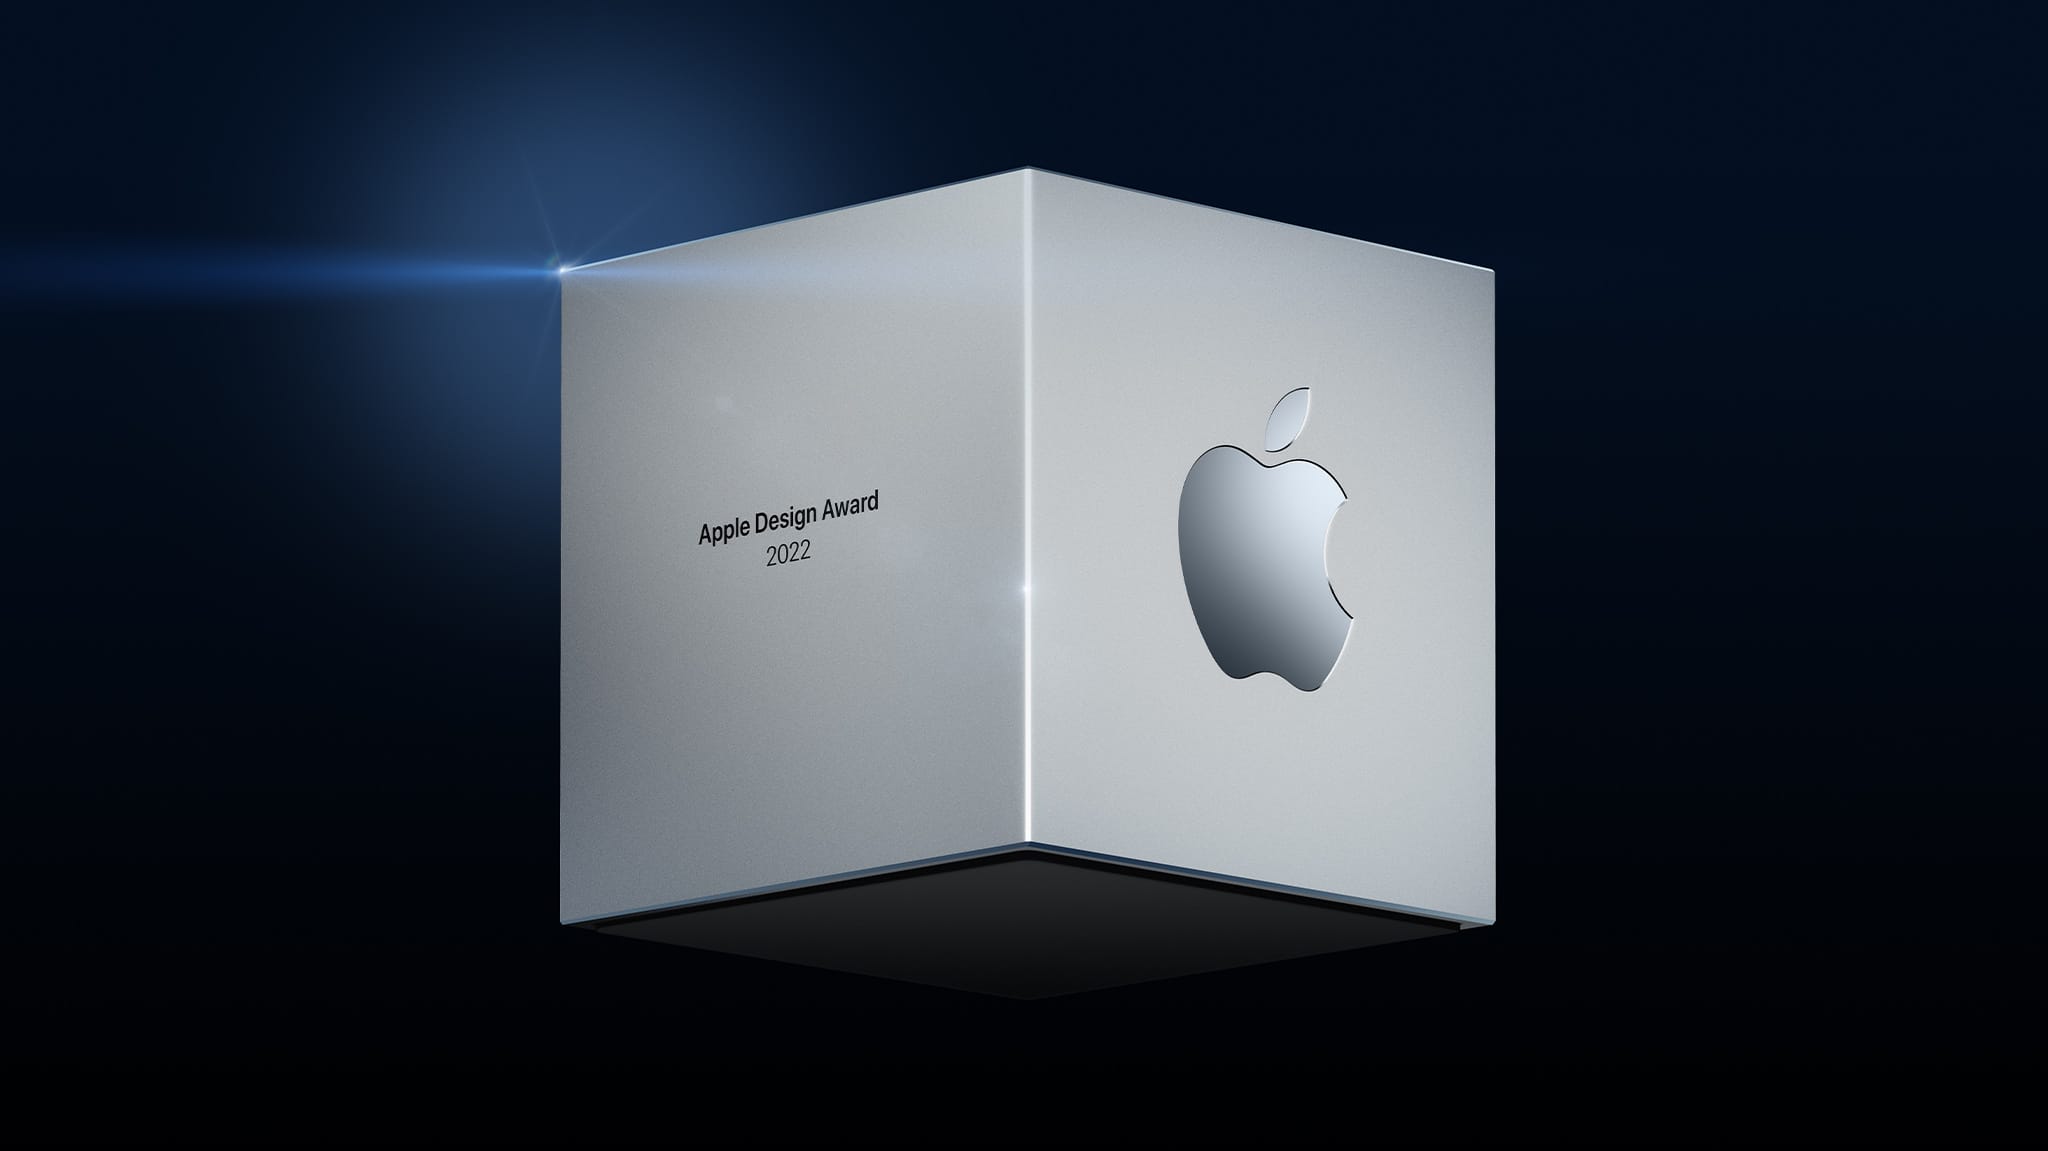 「Apple Design Awards 2022」の受賞者発表